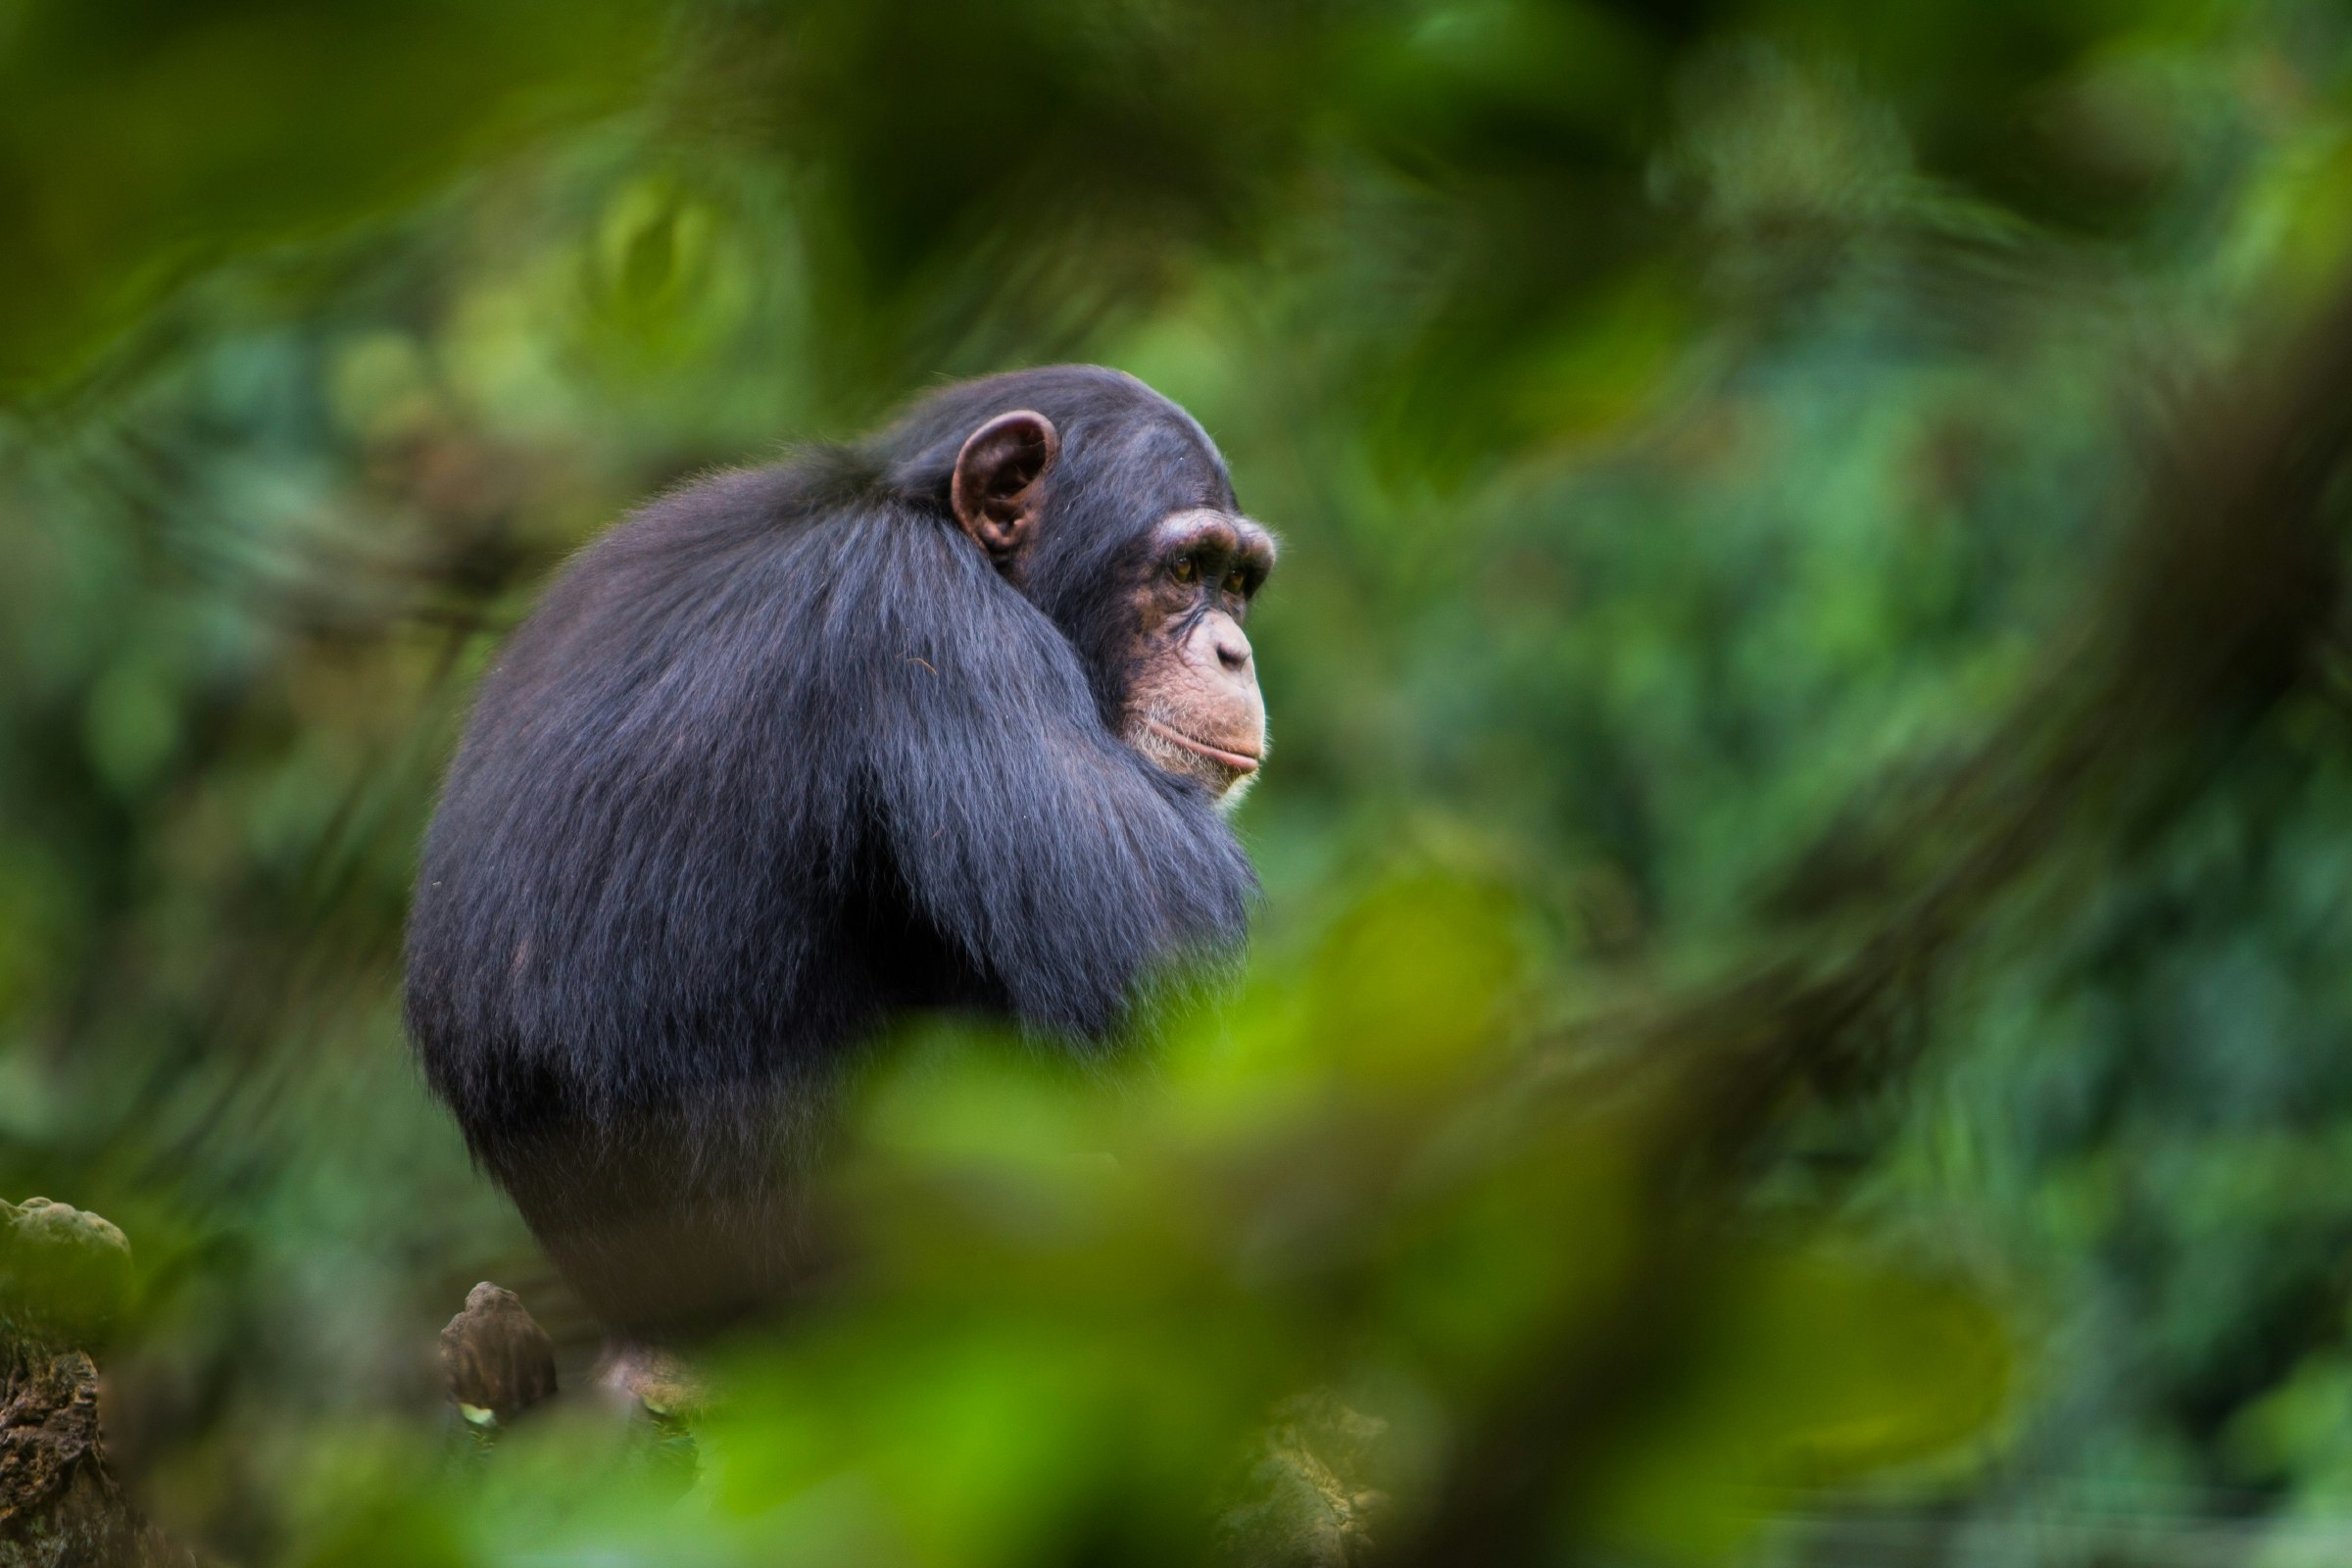 Chimpanzee in Sierra Leone